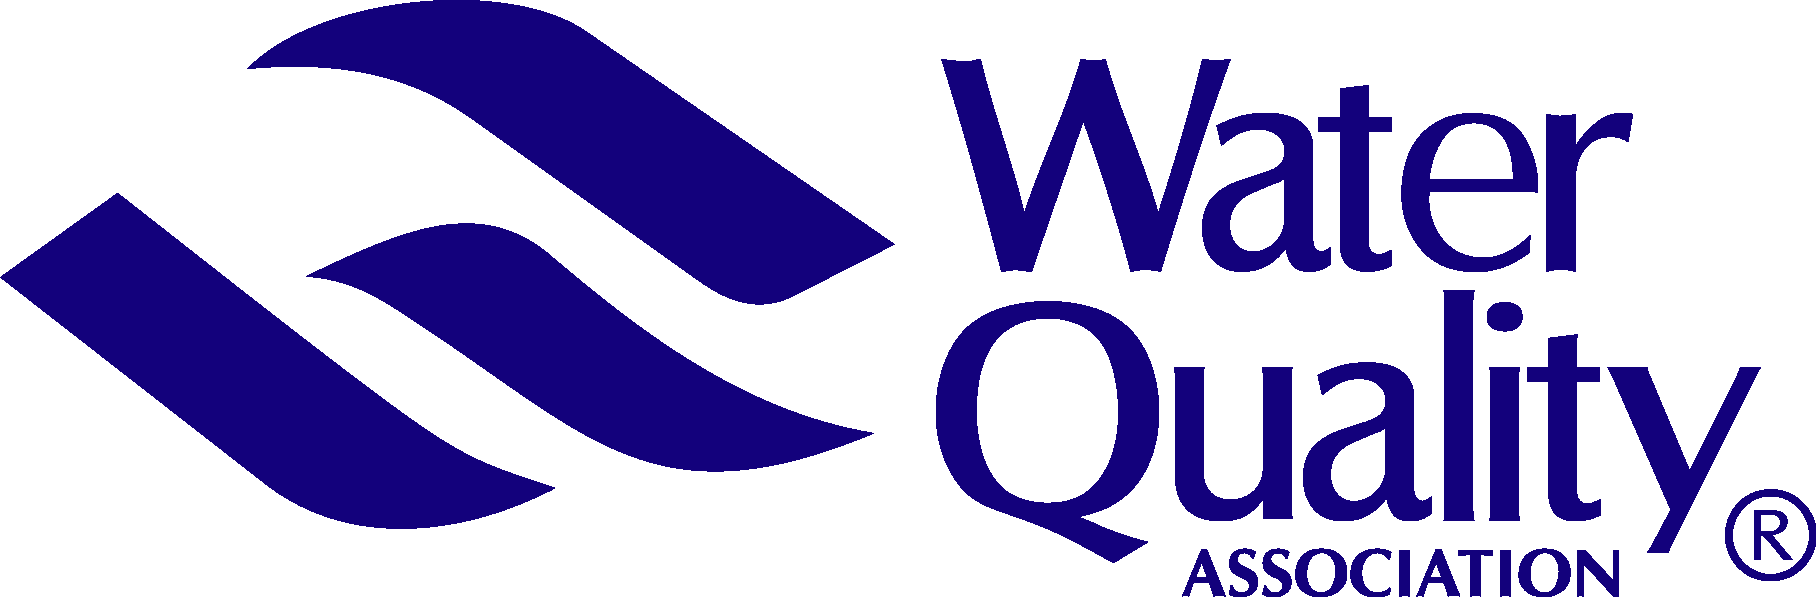 World Olympians Association